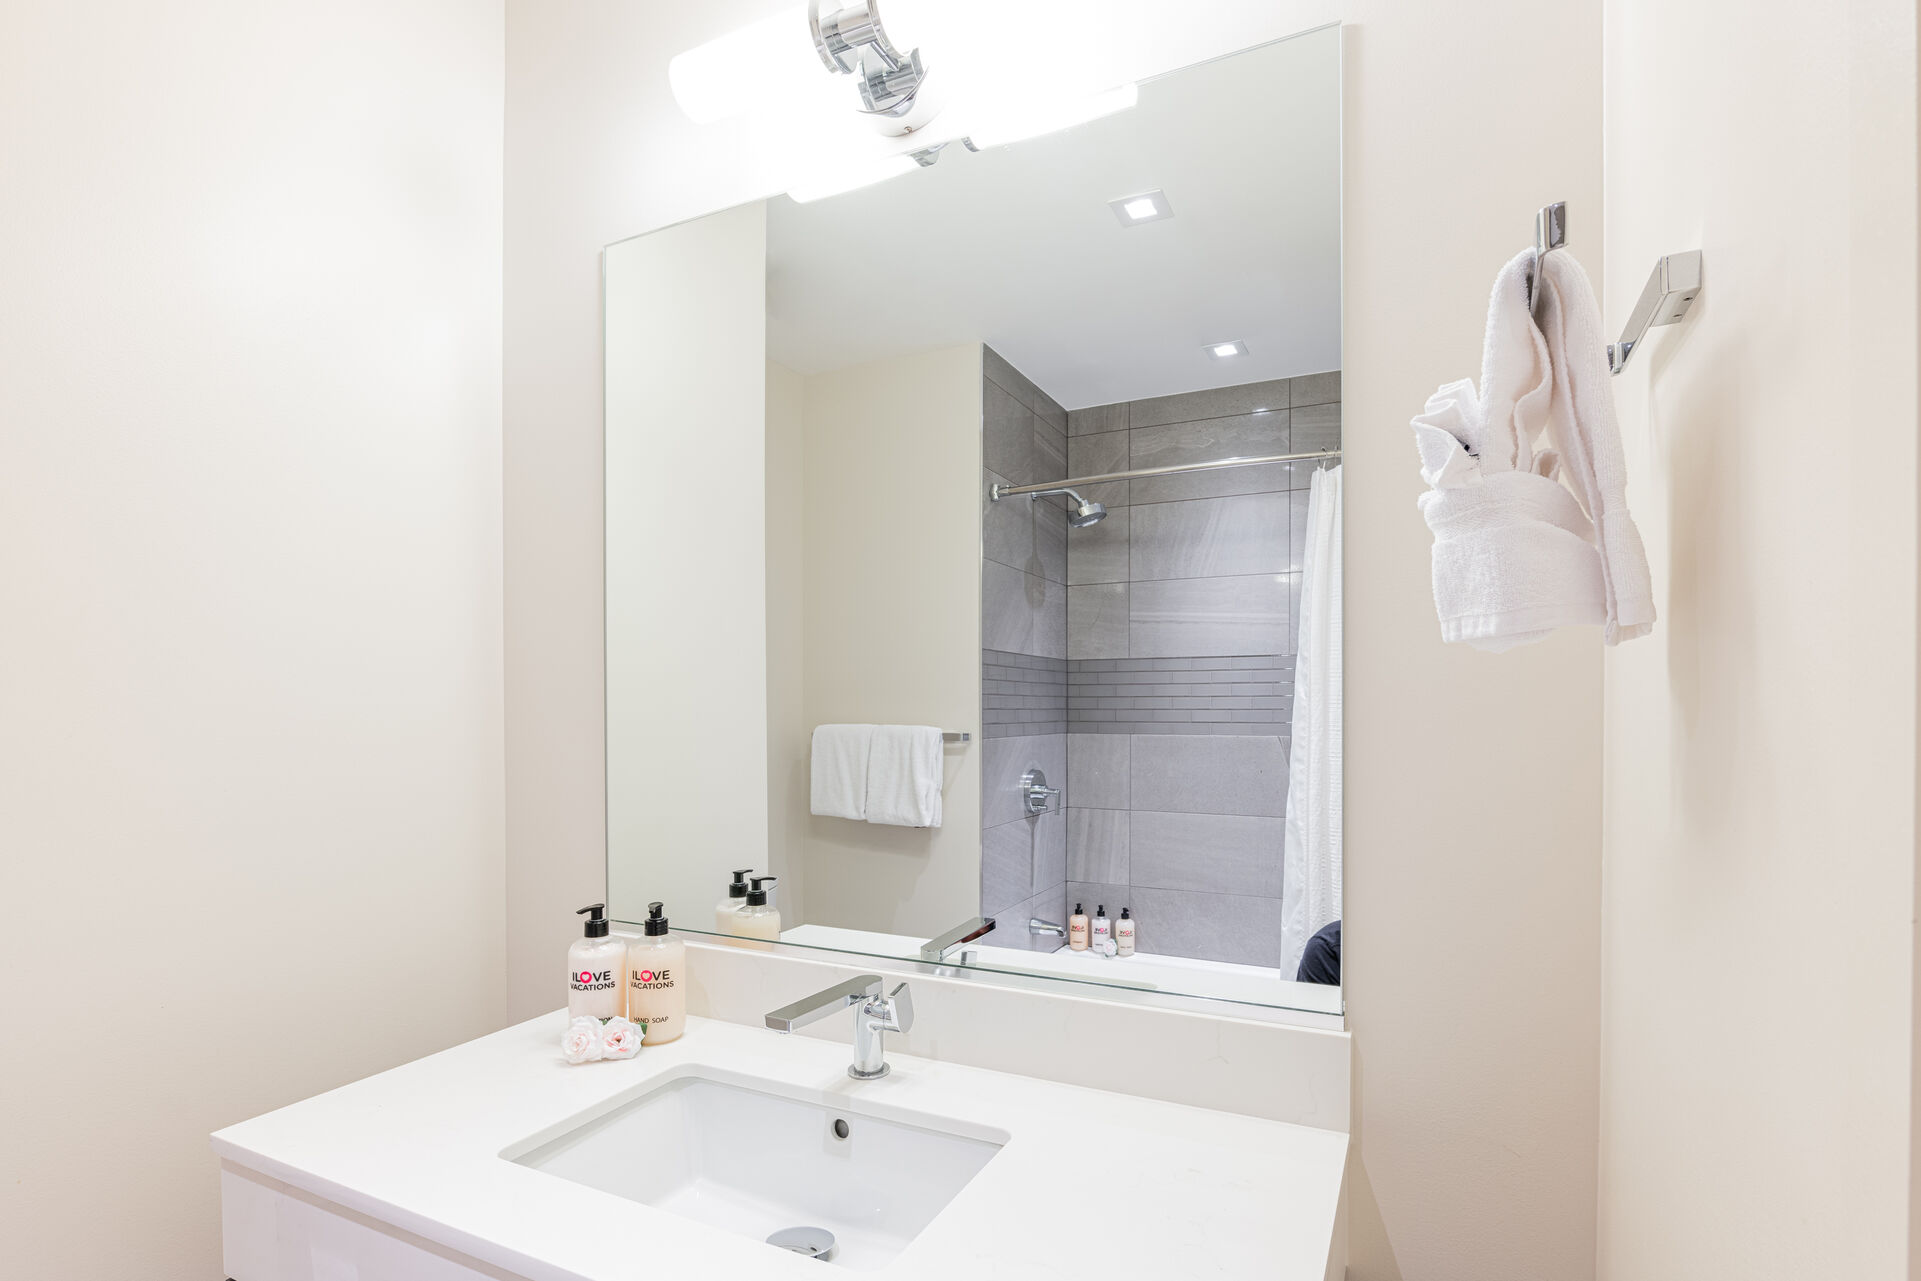 Master Bedroom 3 en suite bathroom with tub/shower combo